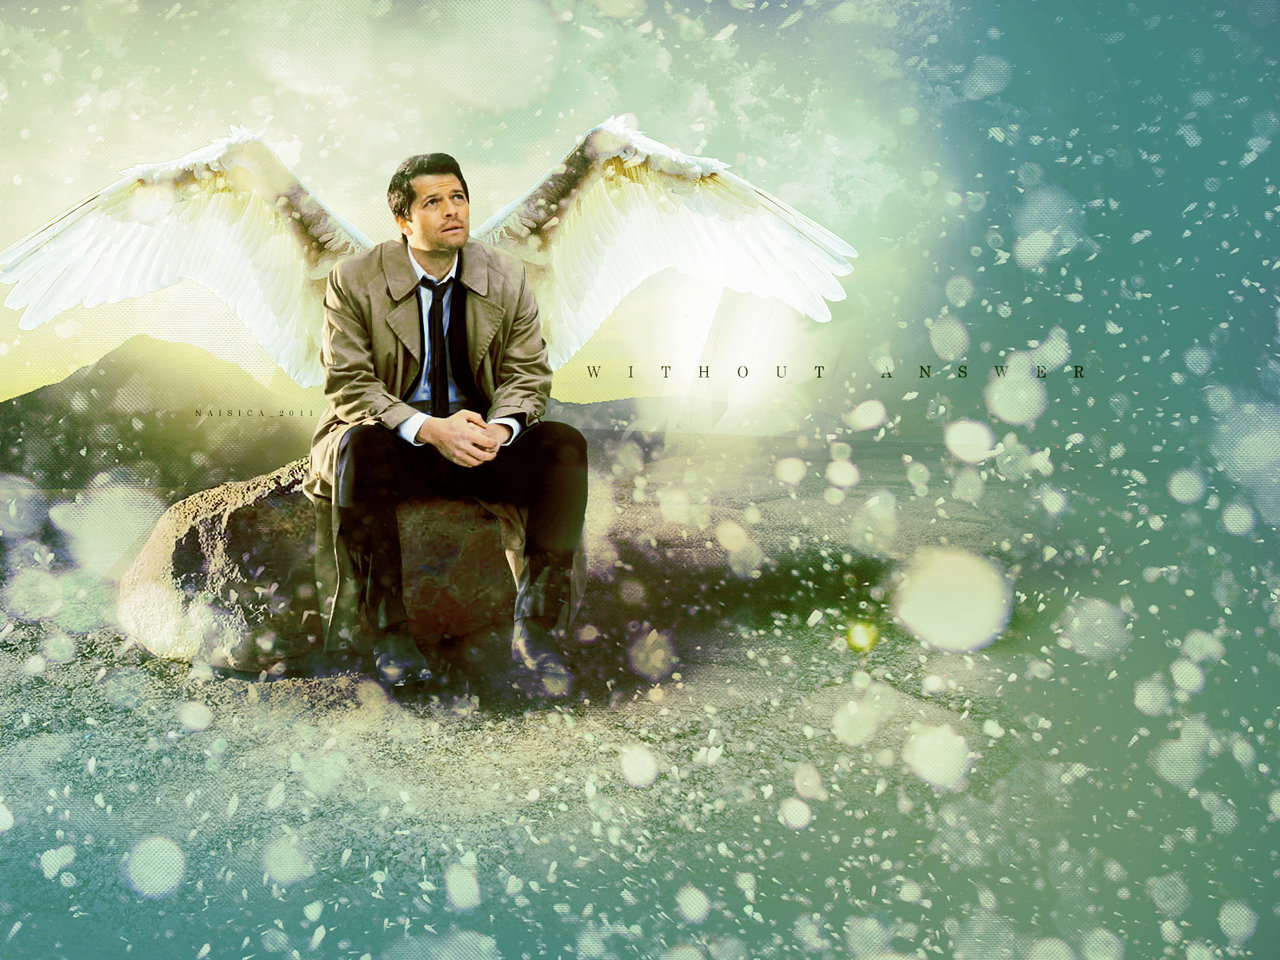 Supernatural Castiel Wallpaper Widescreen Image Pictures Becuo